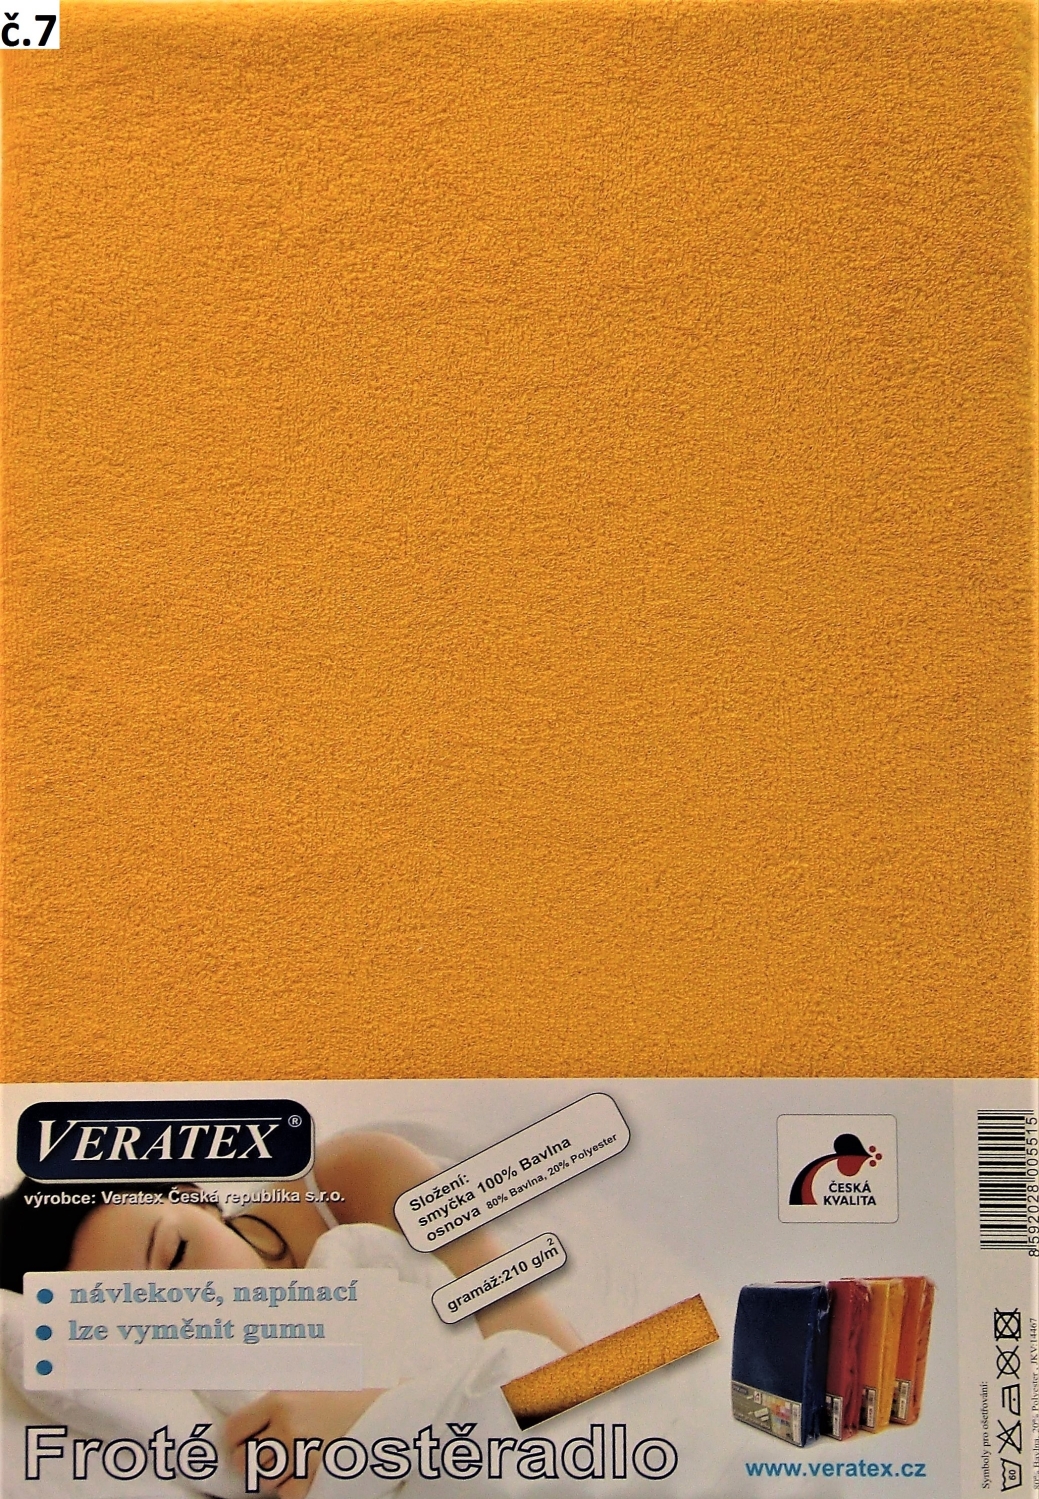 Veratex Froté prostěradlo 80 x 160 cm (č. 7-sytě žlutá) 80 x 160 cm